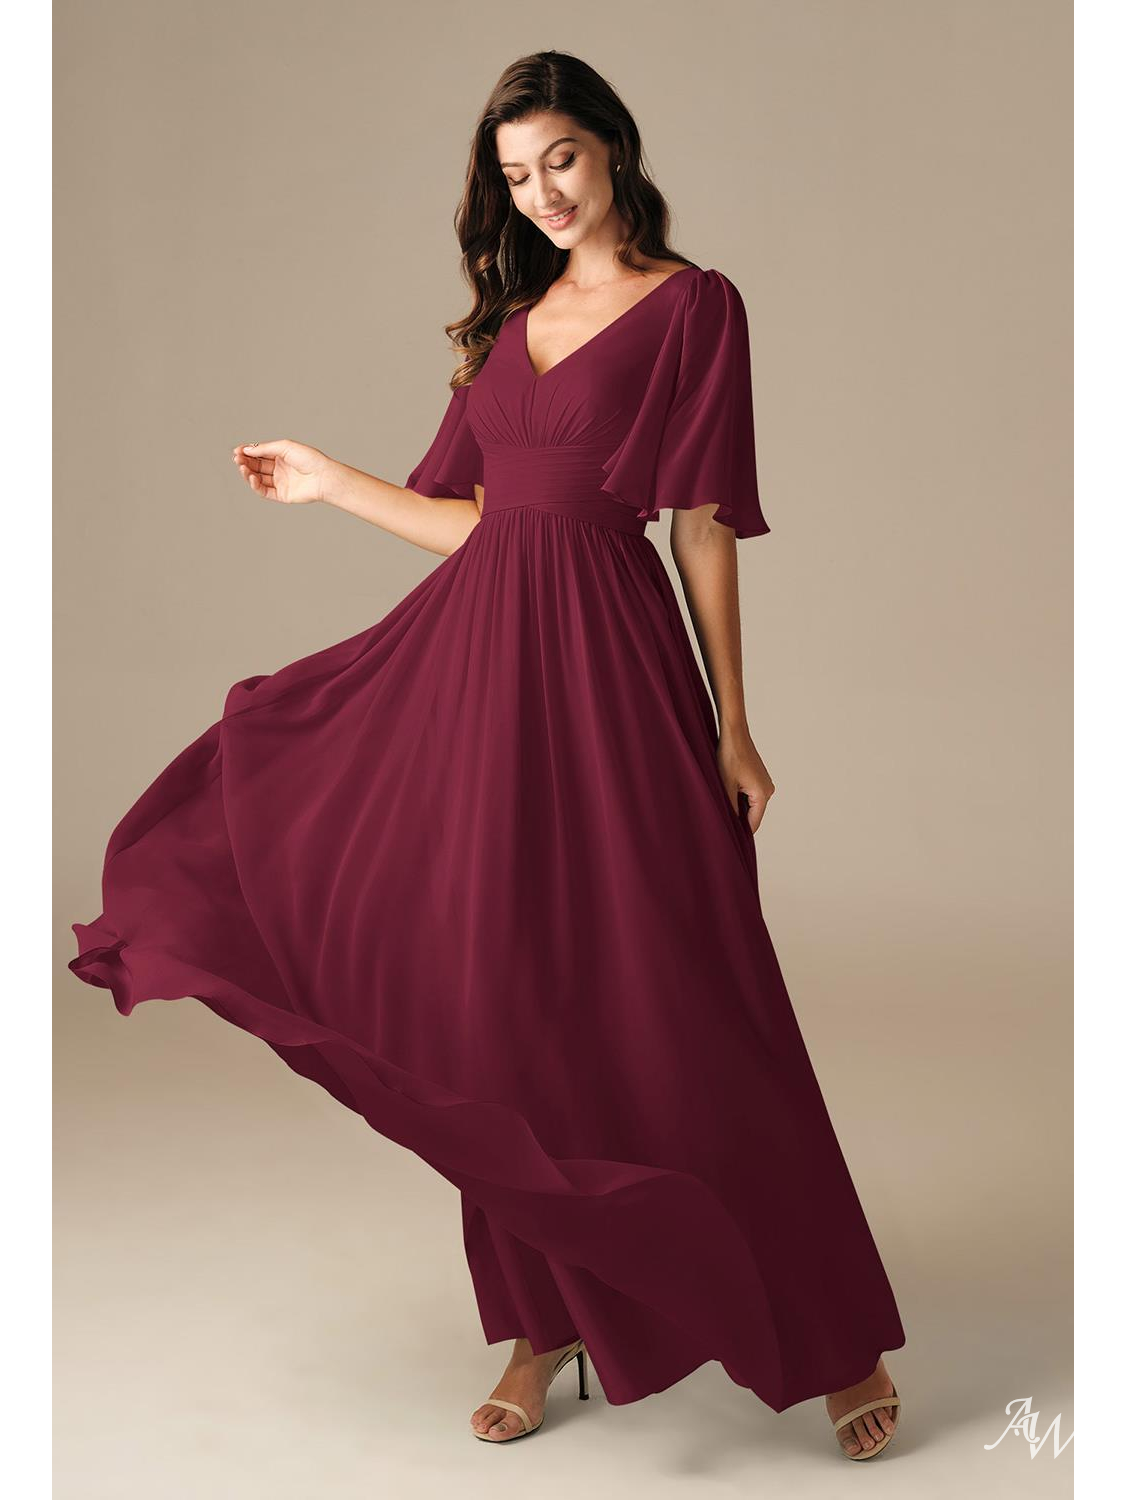 AW Kenney Dress, Burgundy Bridesmaid Dresses, 99.99 | AW Bridal